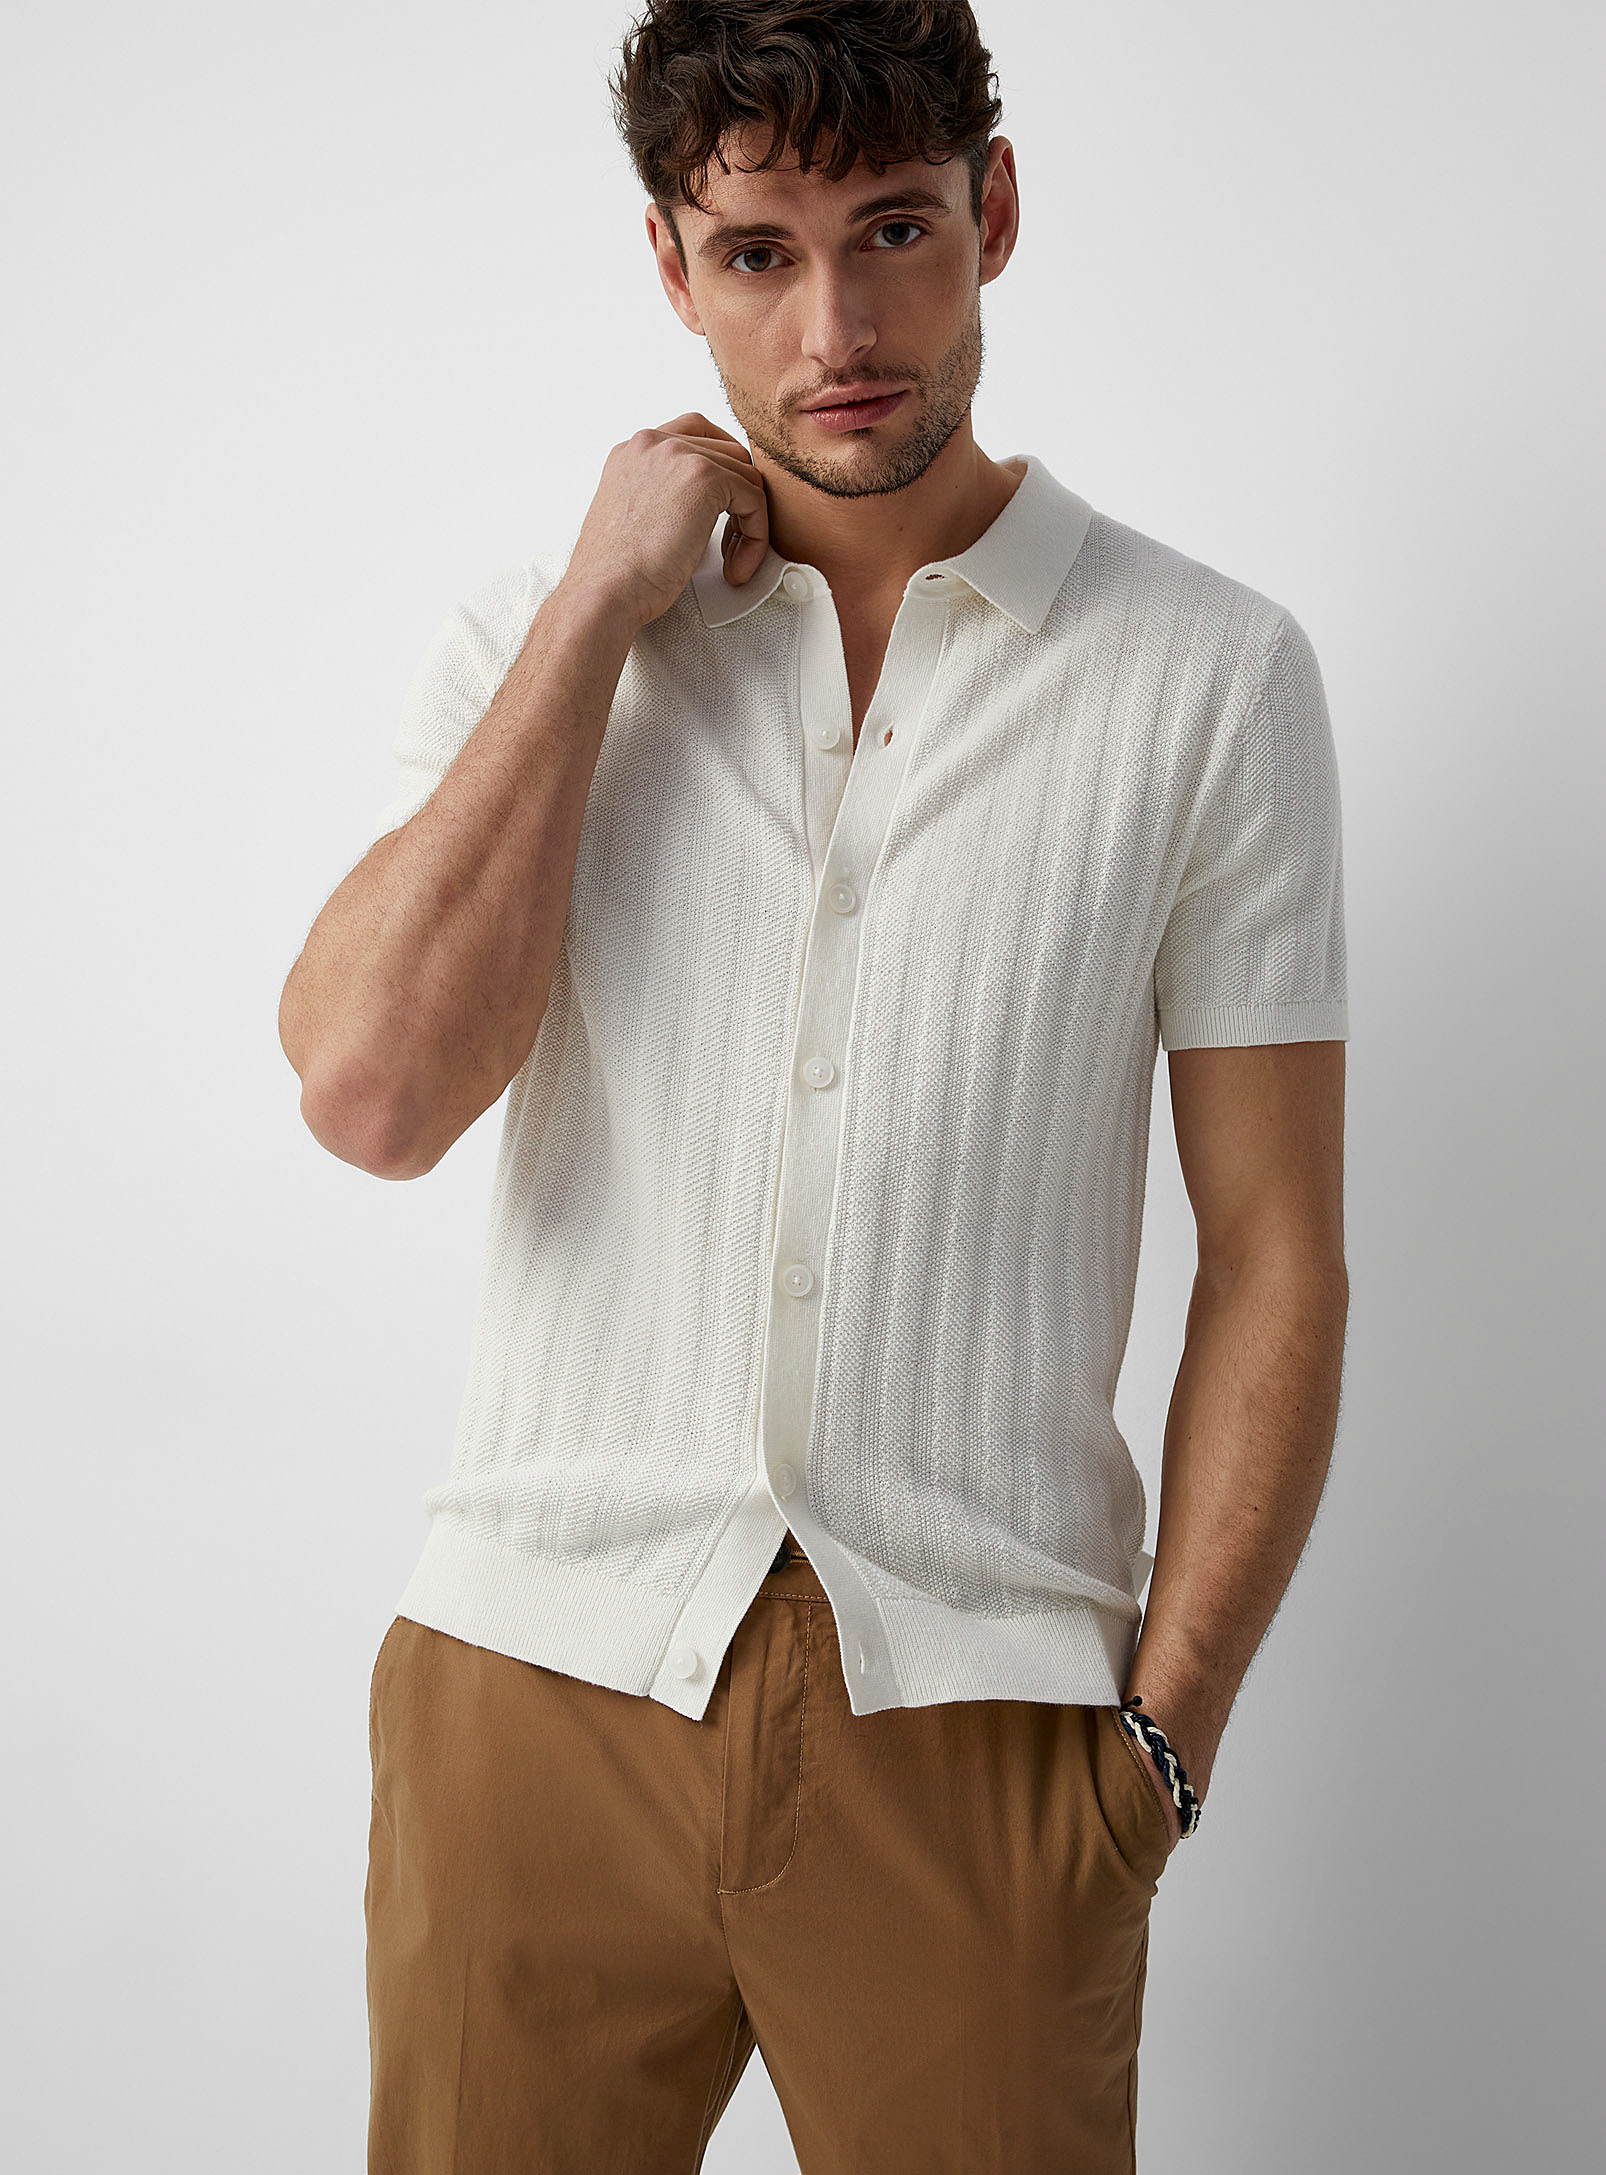 Michael Kors - Men's Piqué stripe knit shirt